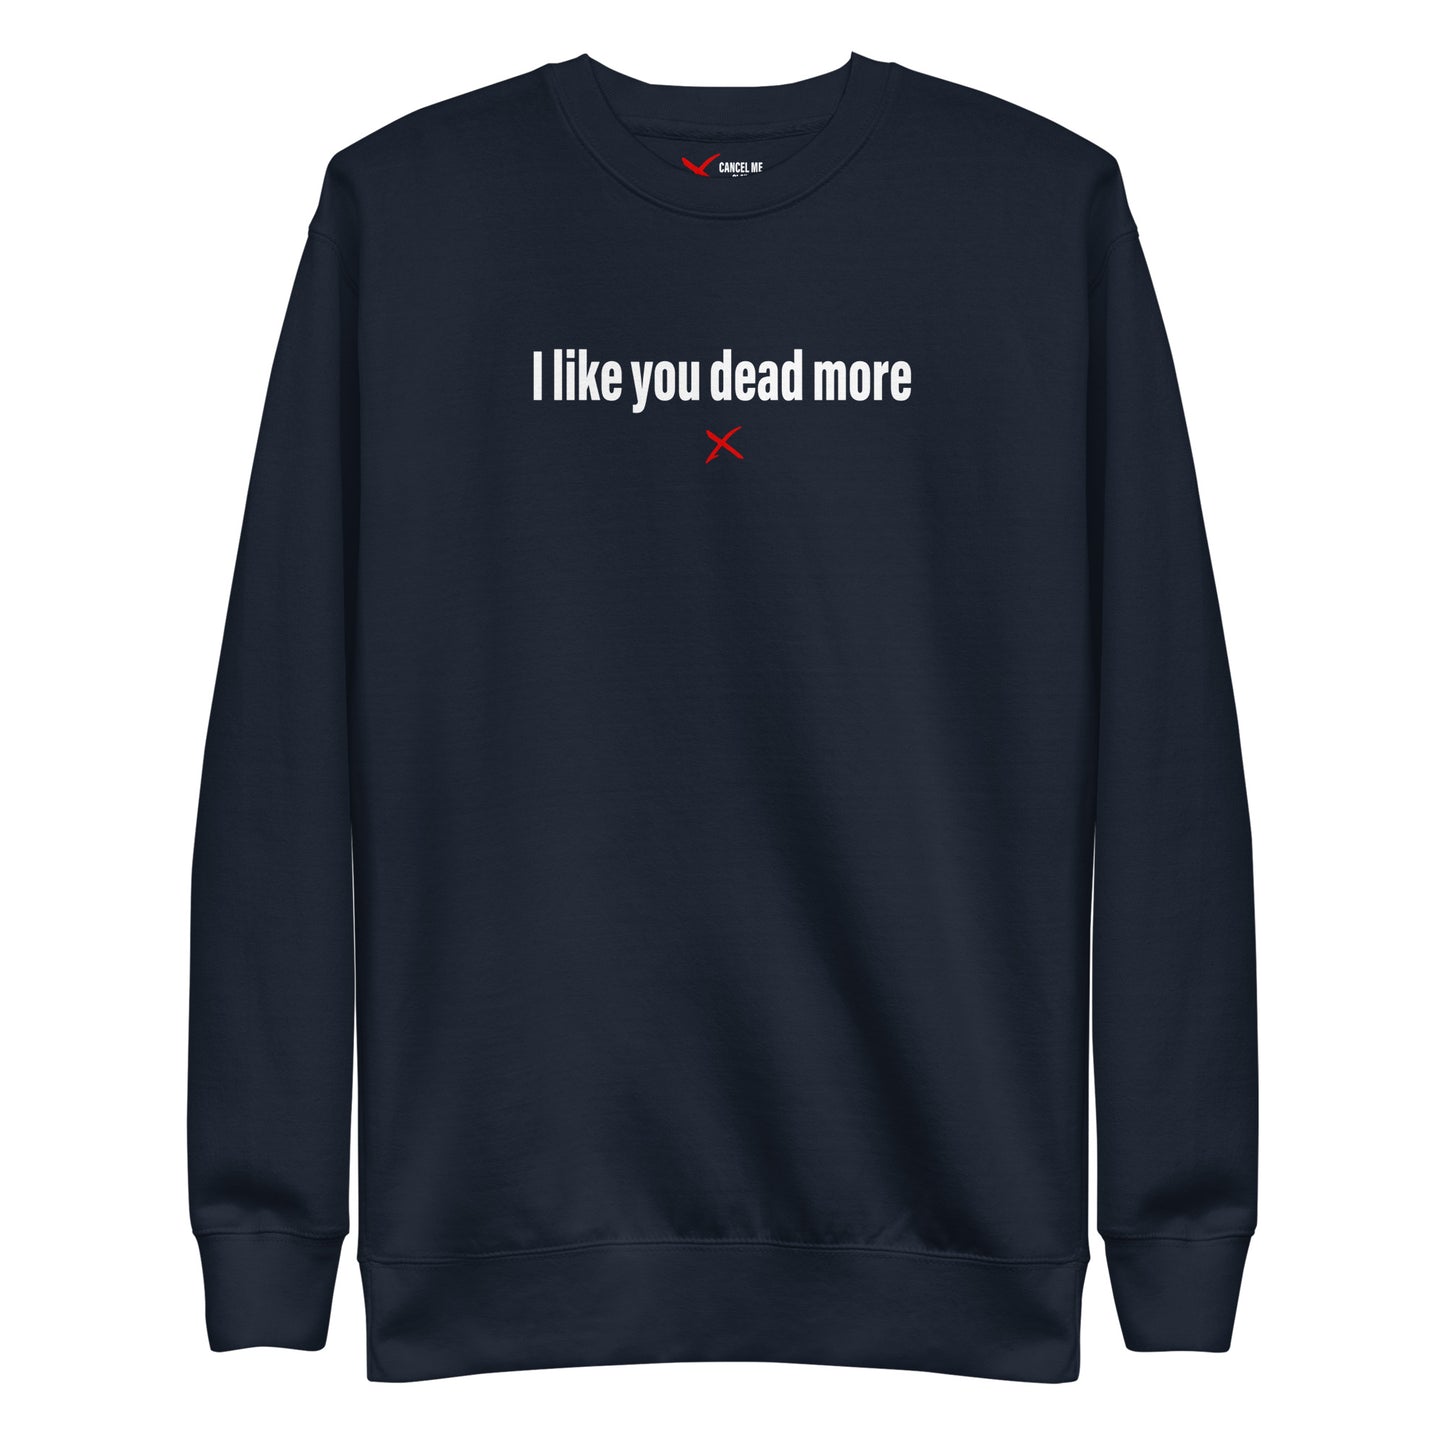 I like you dead more - Sweatshirt